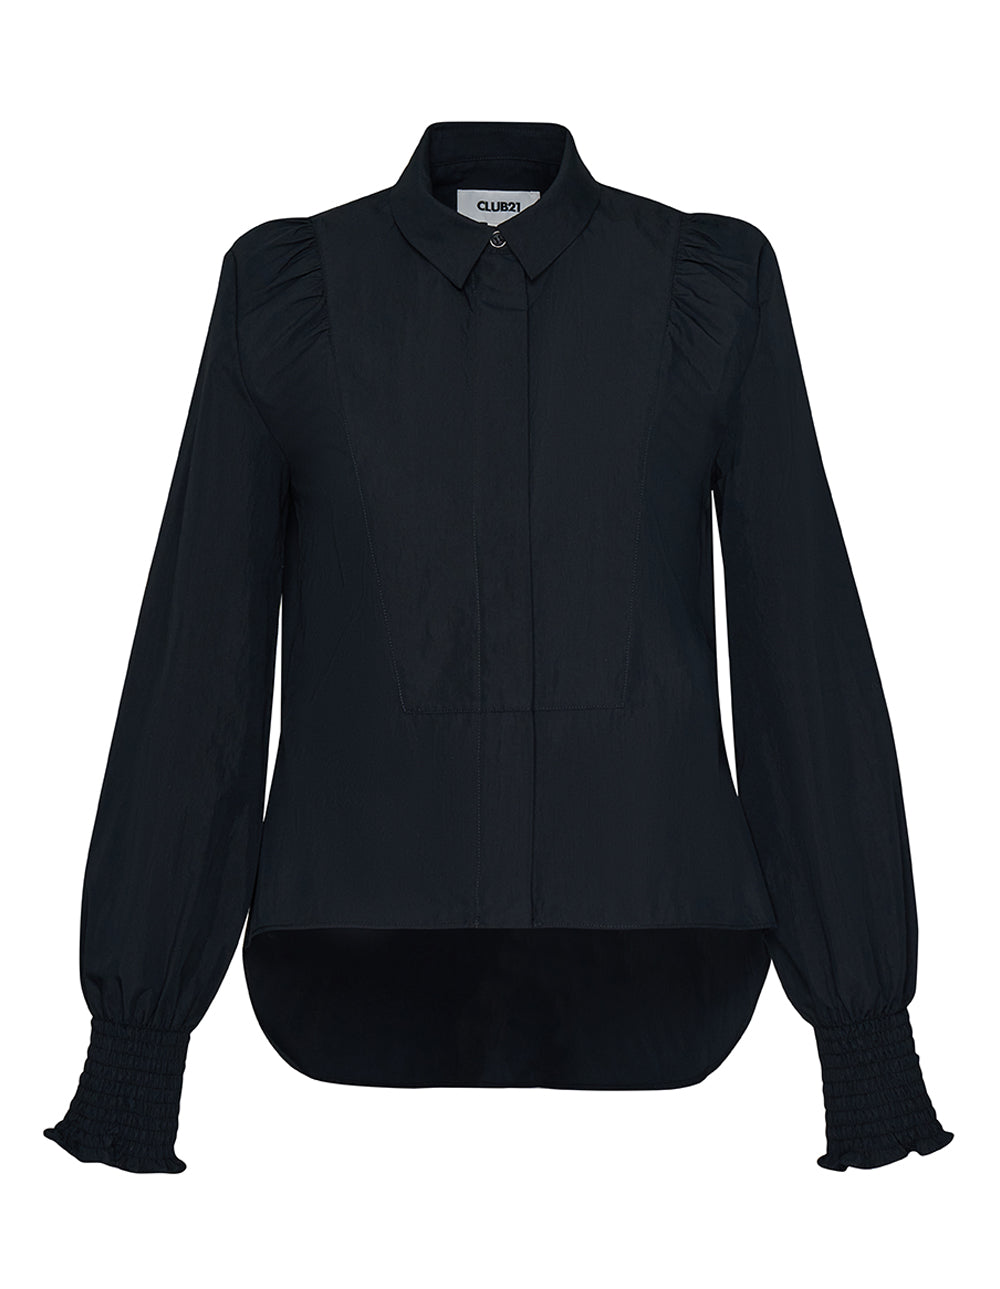 Club21 Collection Cotton Nylon Padded Shirt (Black)